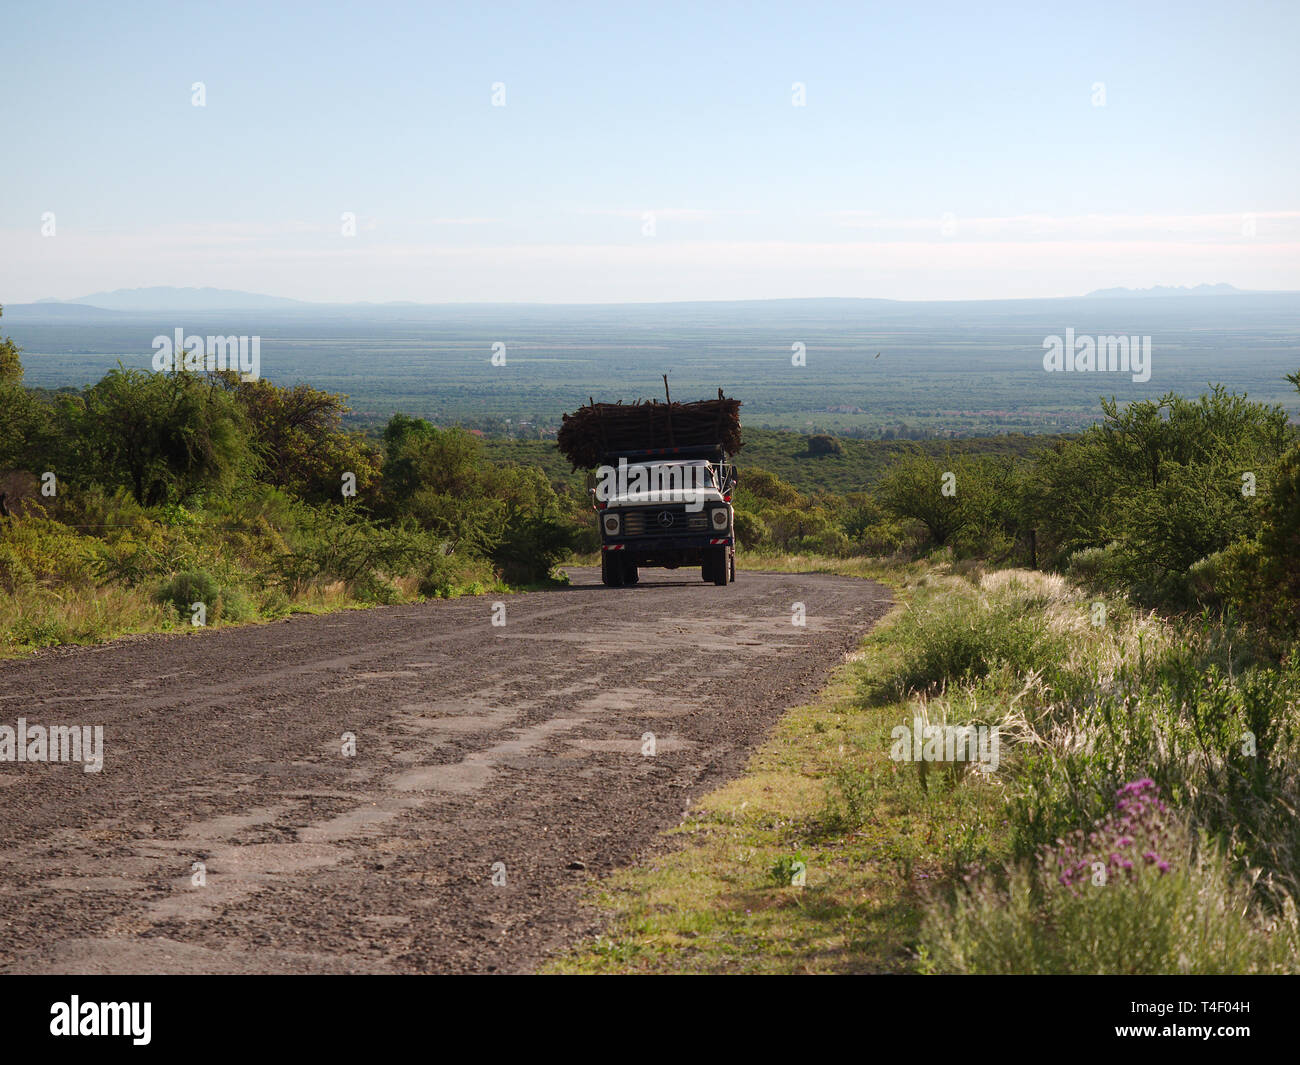 Villa de Merlo, San Luis, Argentina - 2019: The view alongside a rural road near the city center. Stock Photo